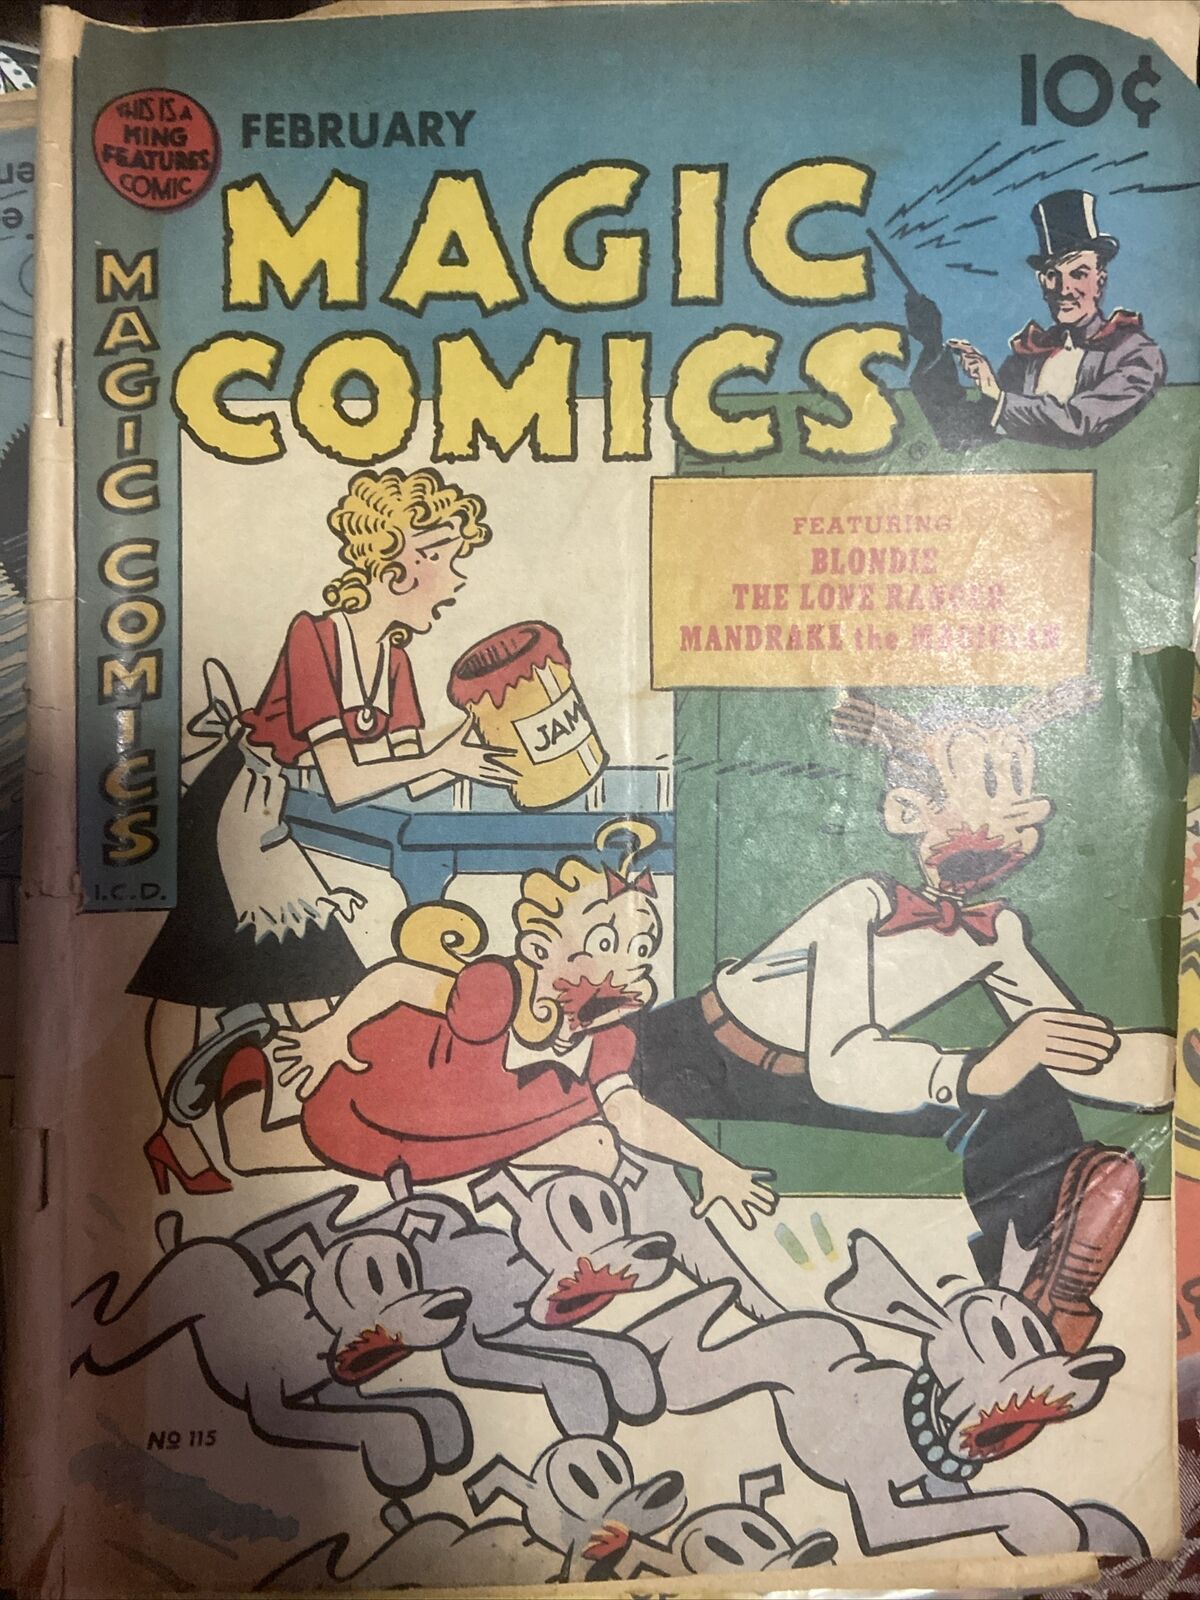 Magic Comics #115 1949